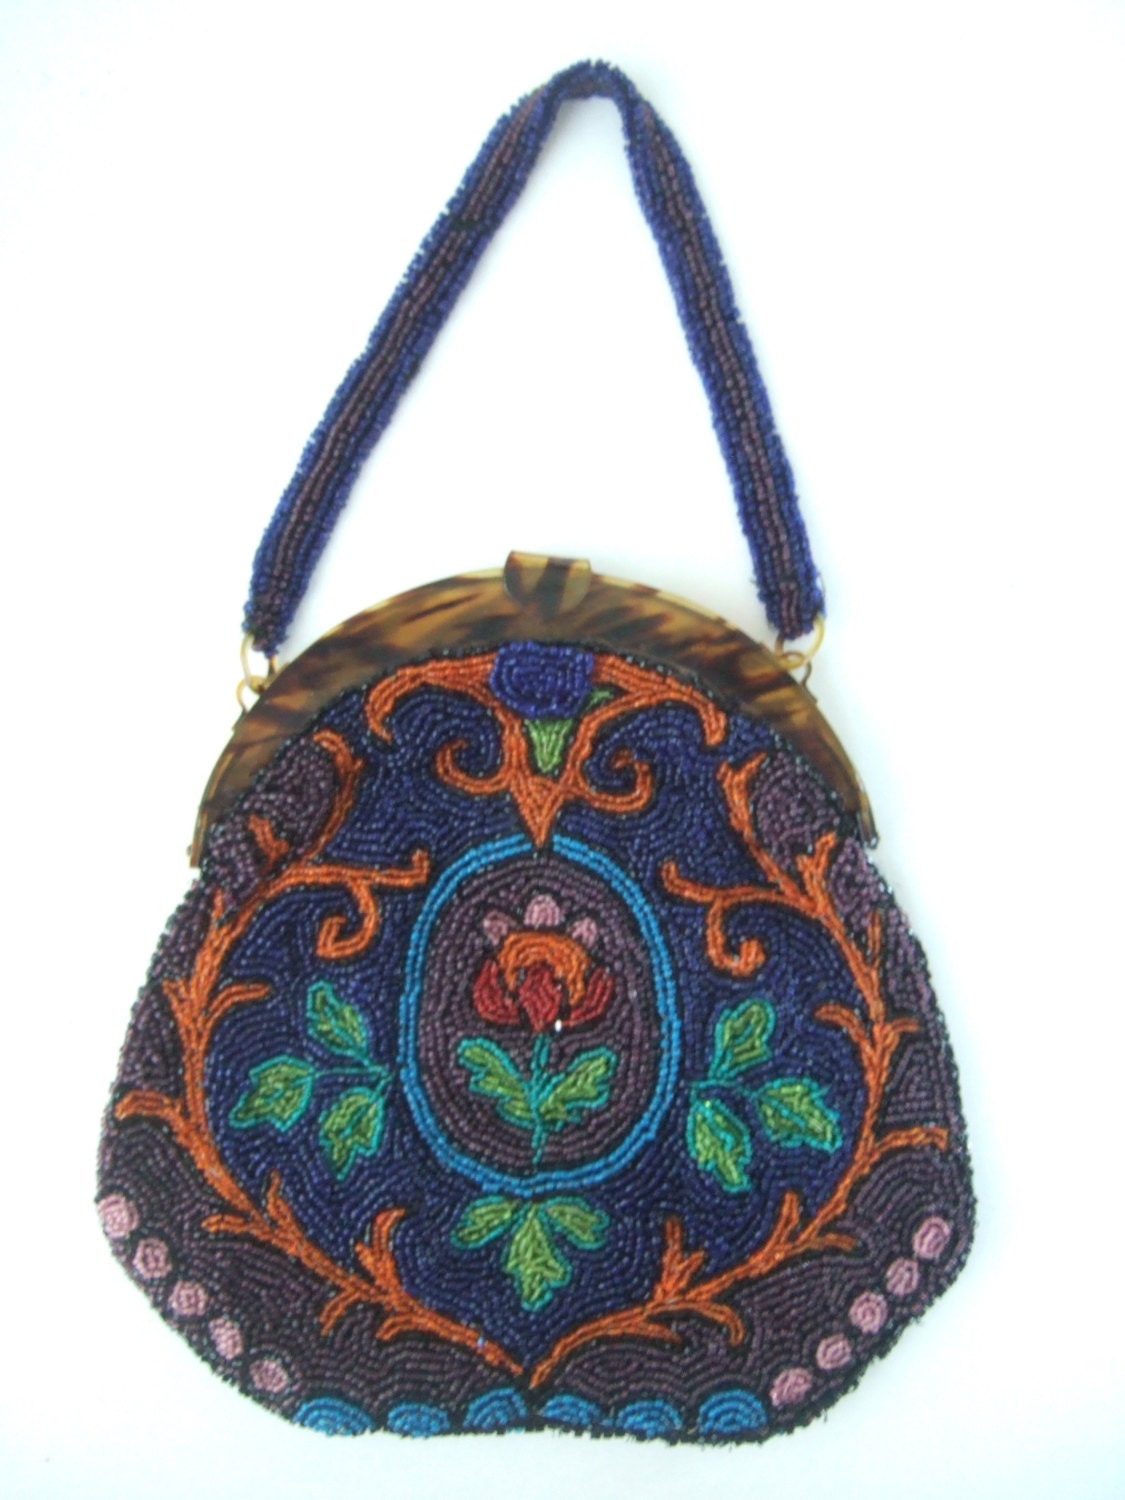 Vintage 1920s Art Deco floral beaded purse or handbag with